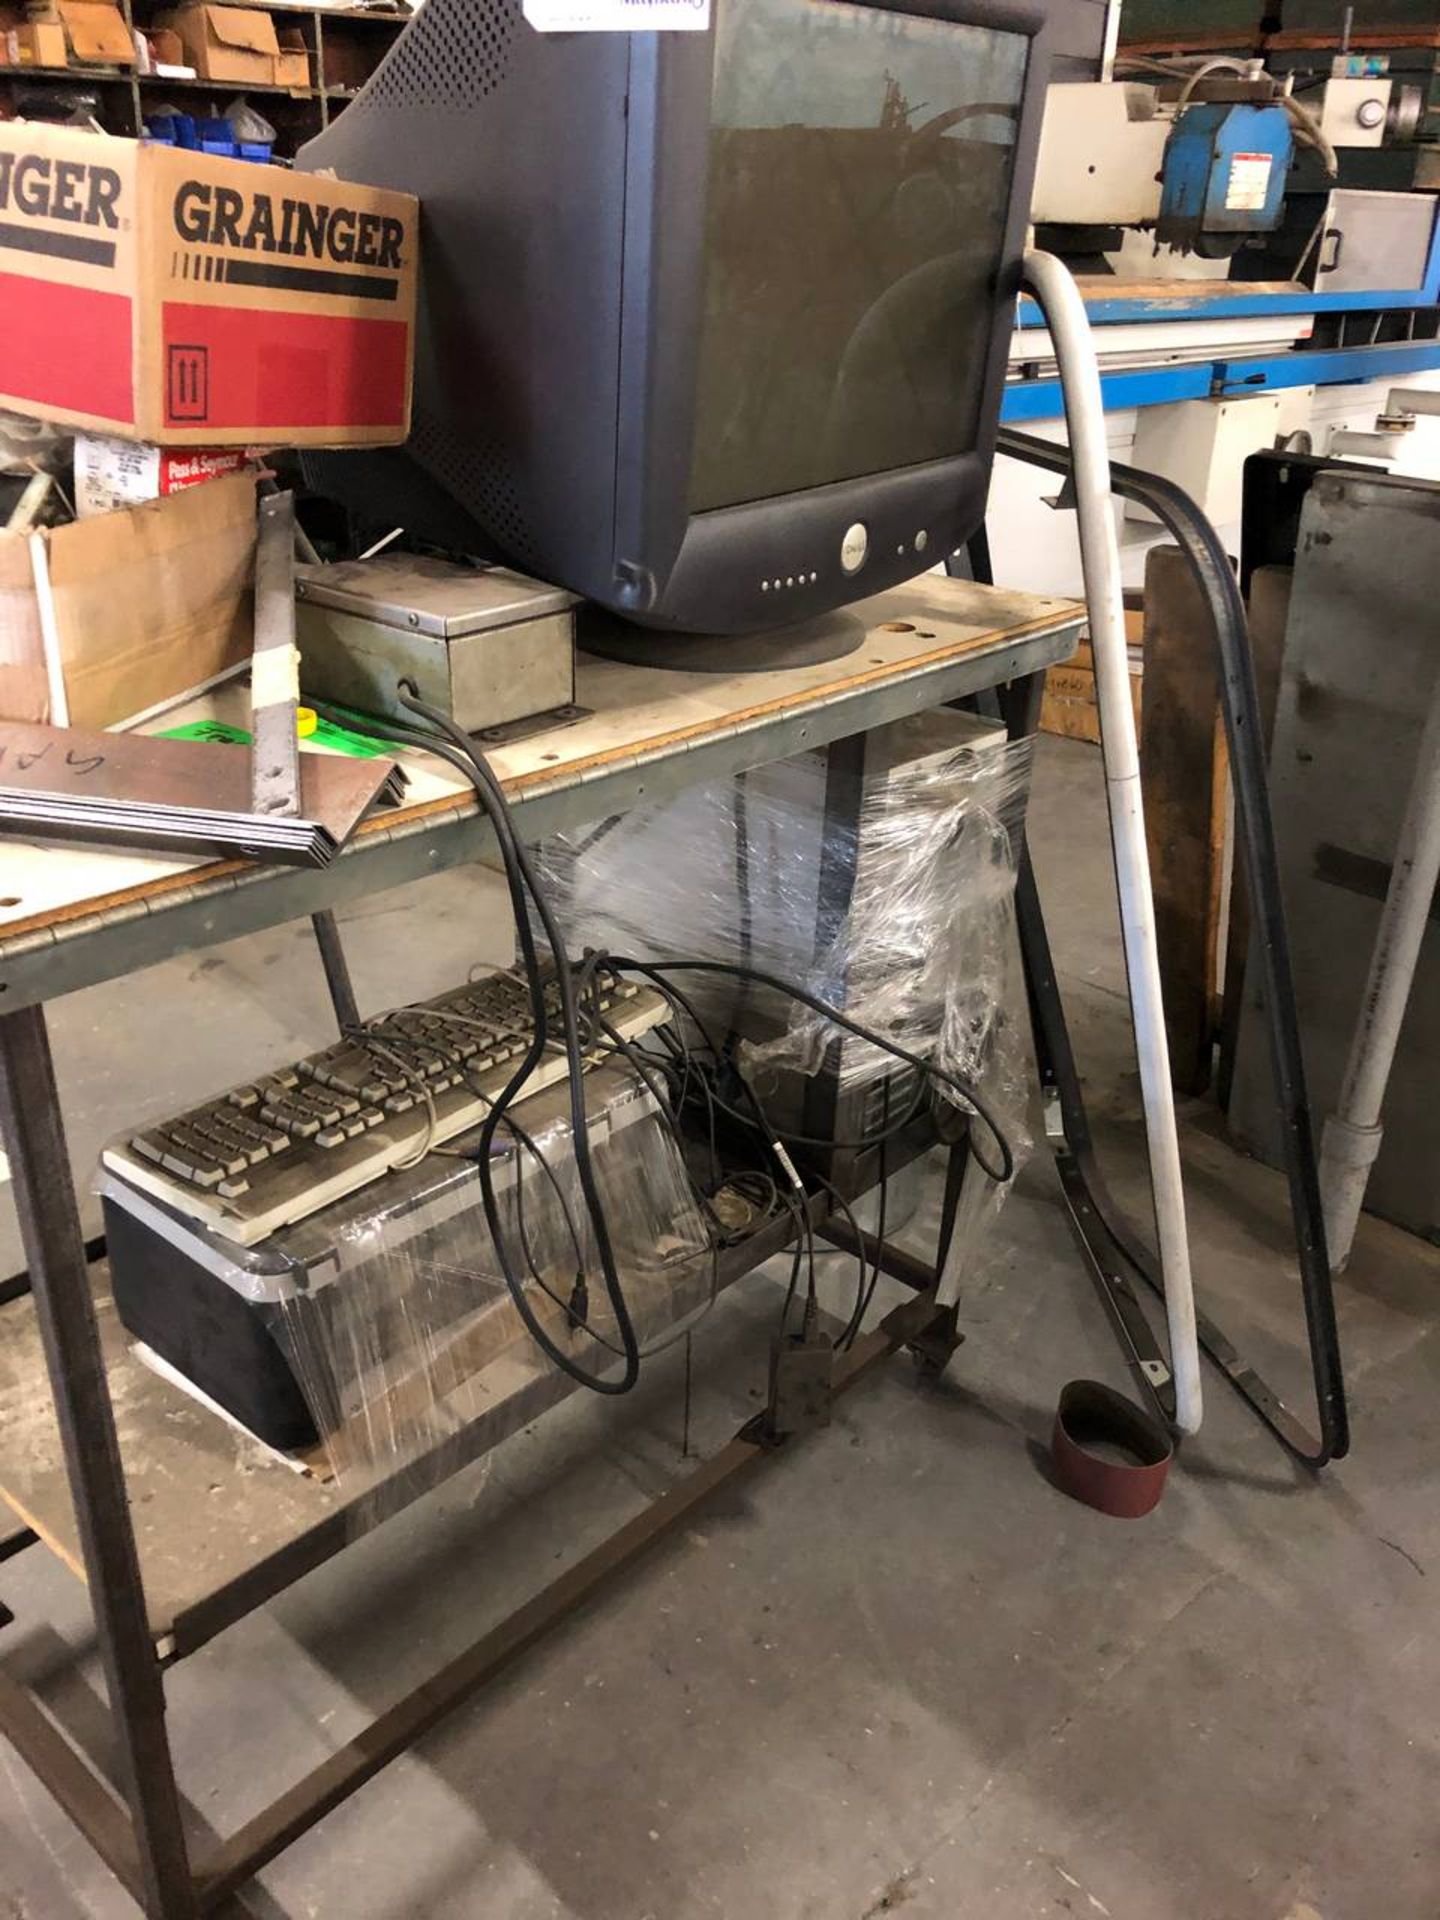 Computer Monitor and Printer on Cart